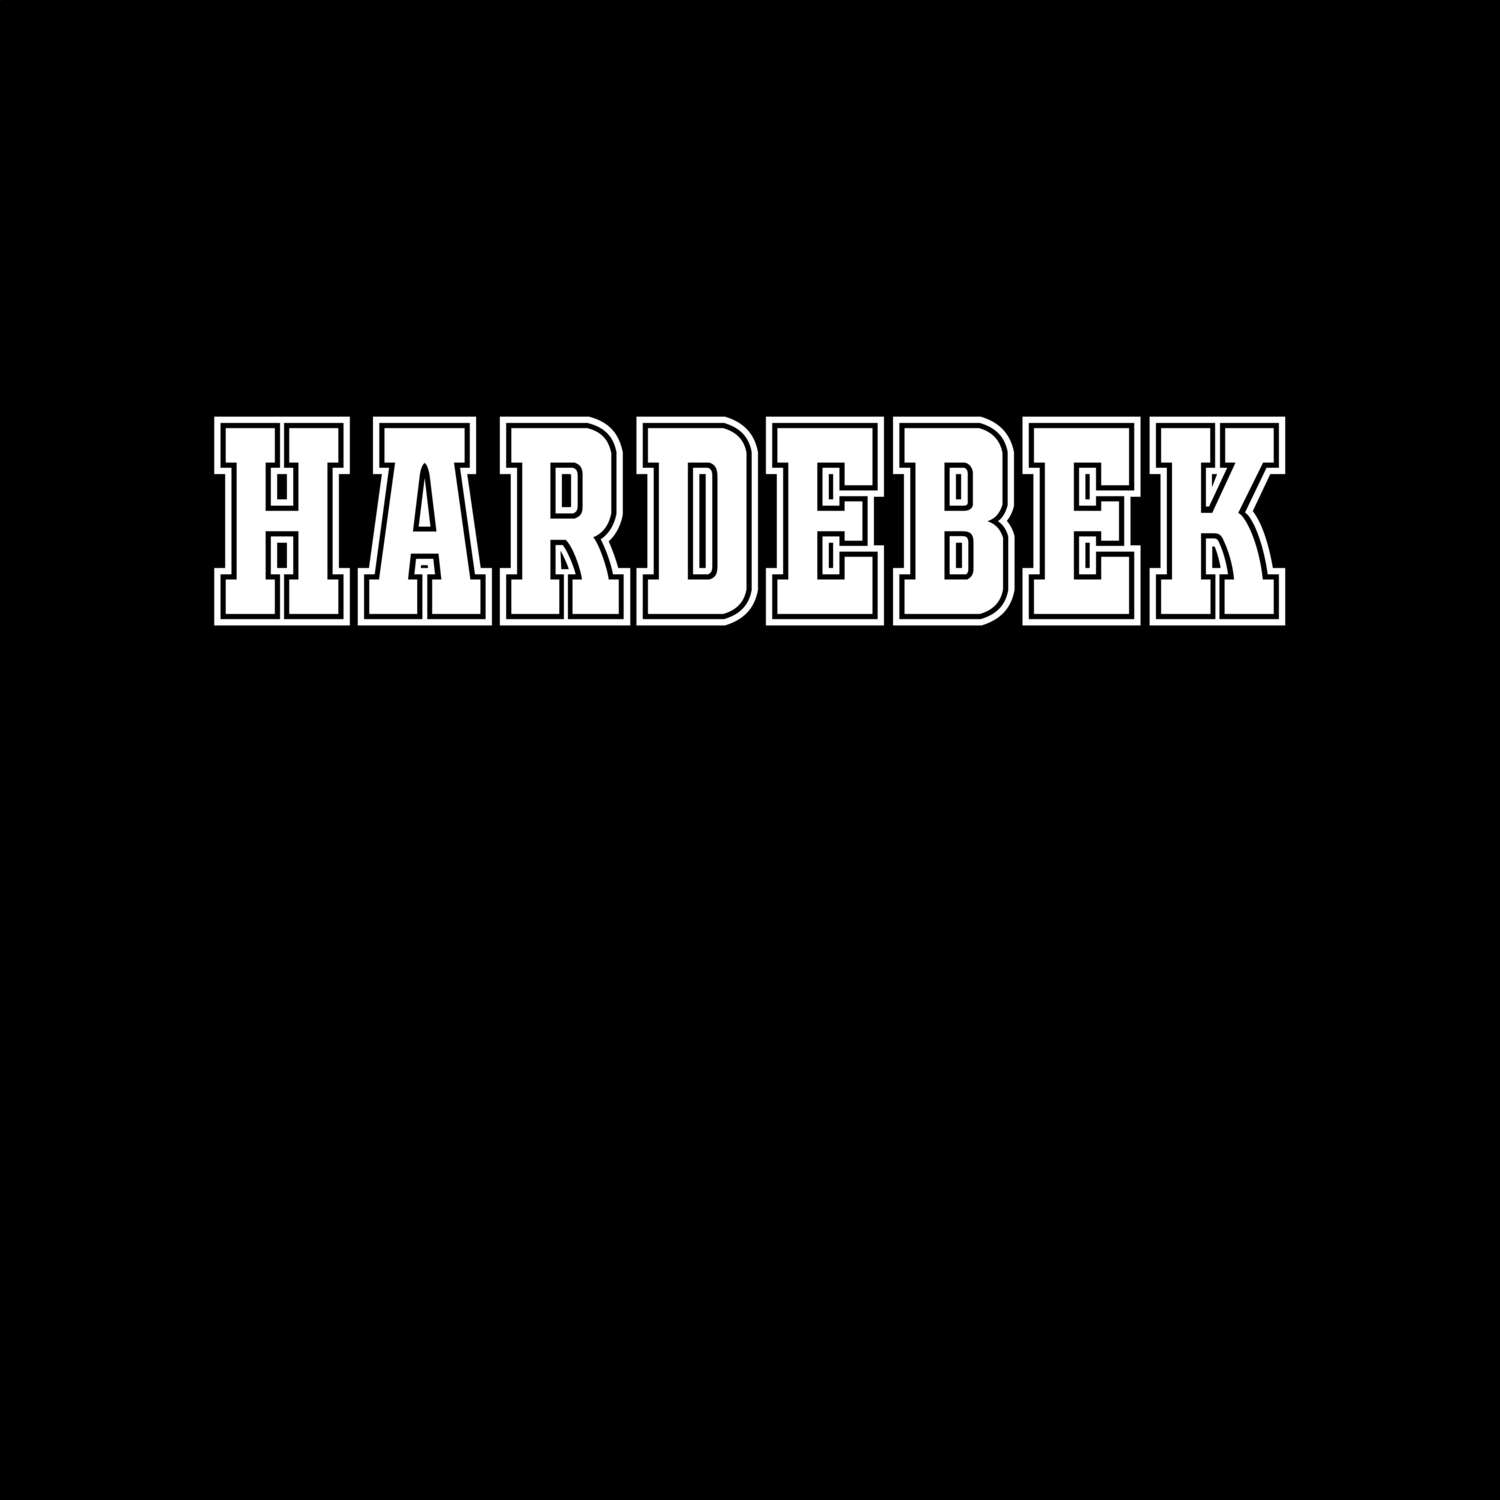 Hardebek T-Shirt »Classic«